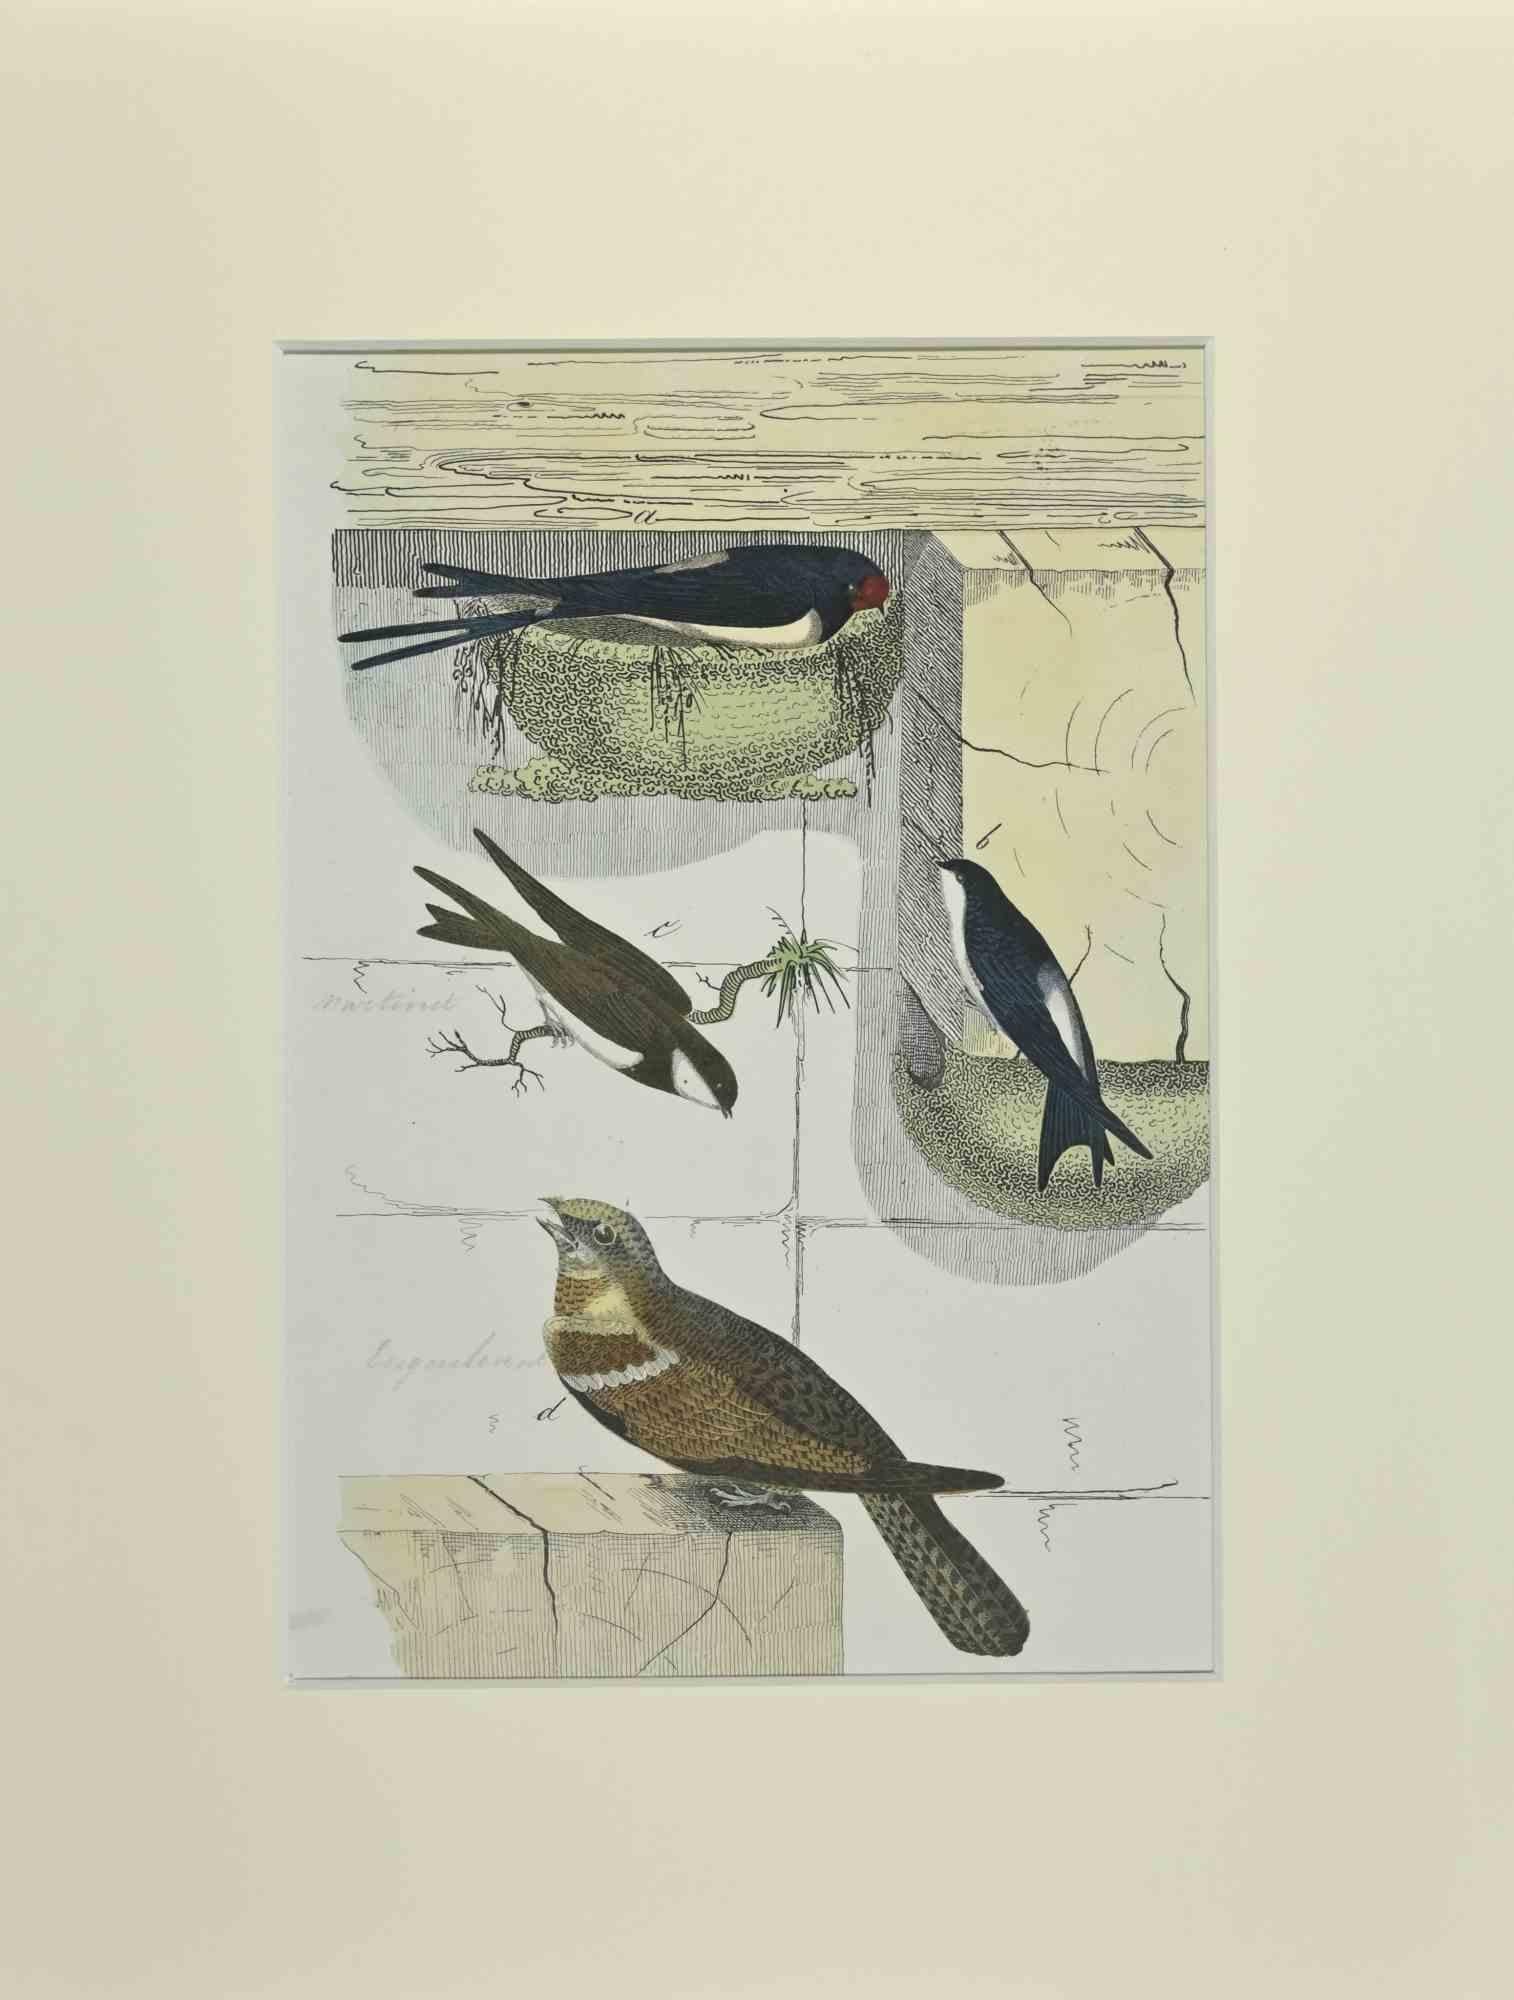 Swallows	- Etching by Johann Friedrich Naumann - 1840